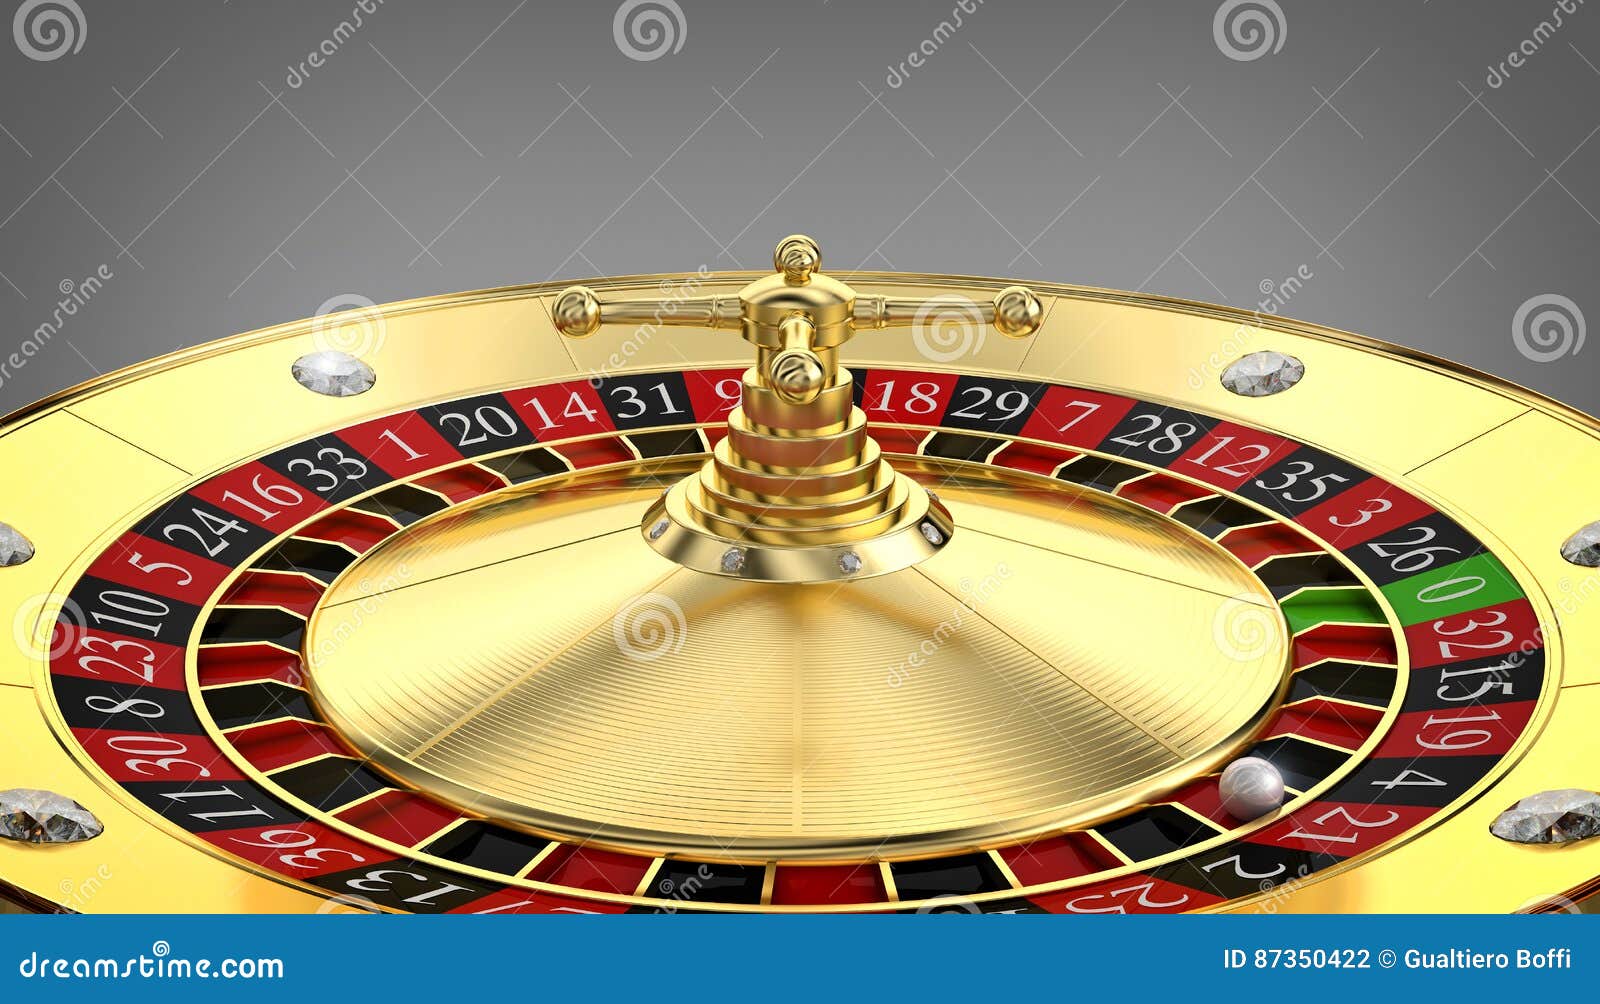 golden classic roulette